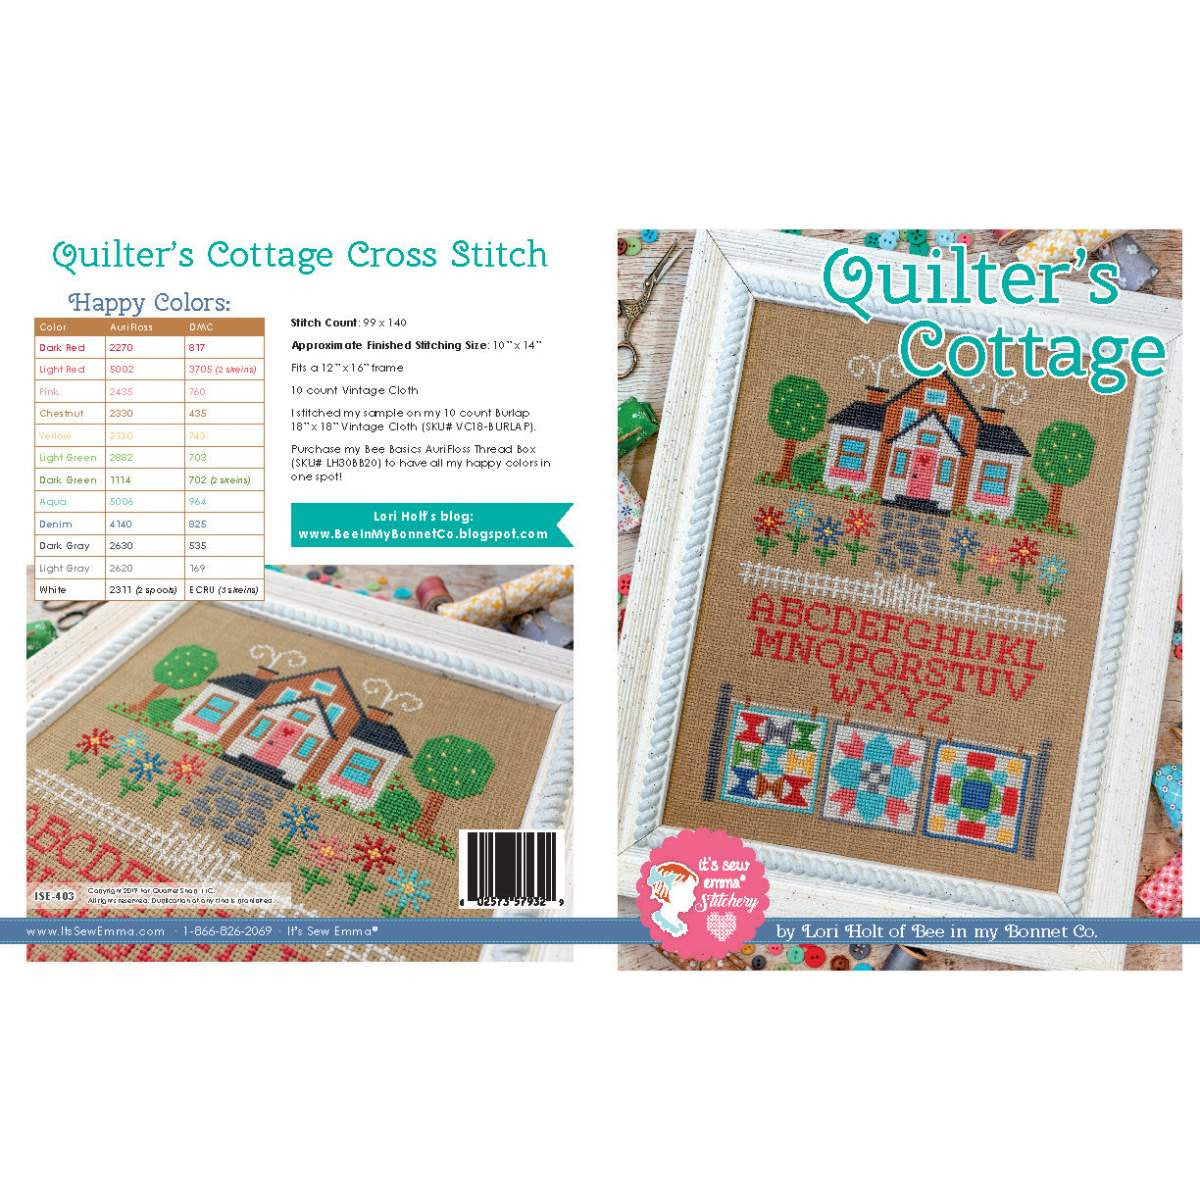 quilter's cottage cross stitch pattern